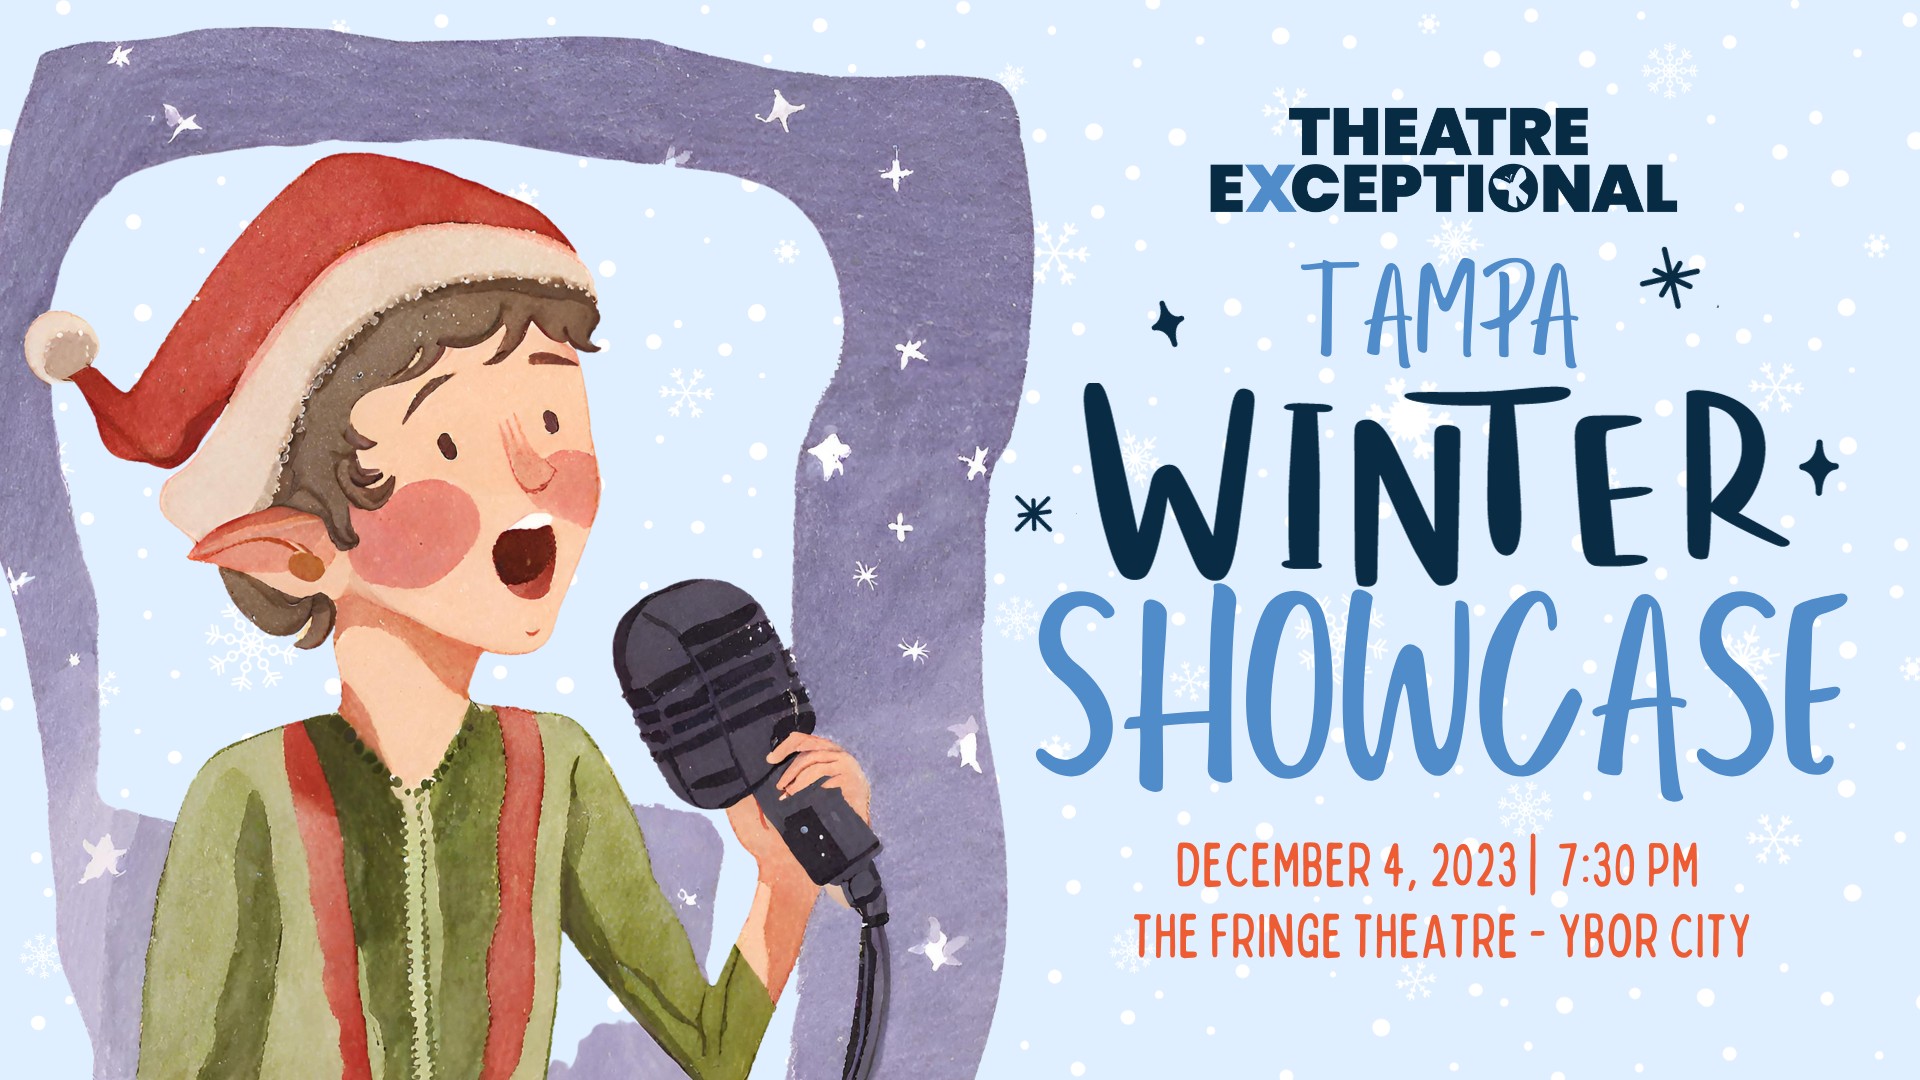 Theatre eXceptional's winter showcase poster.